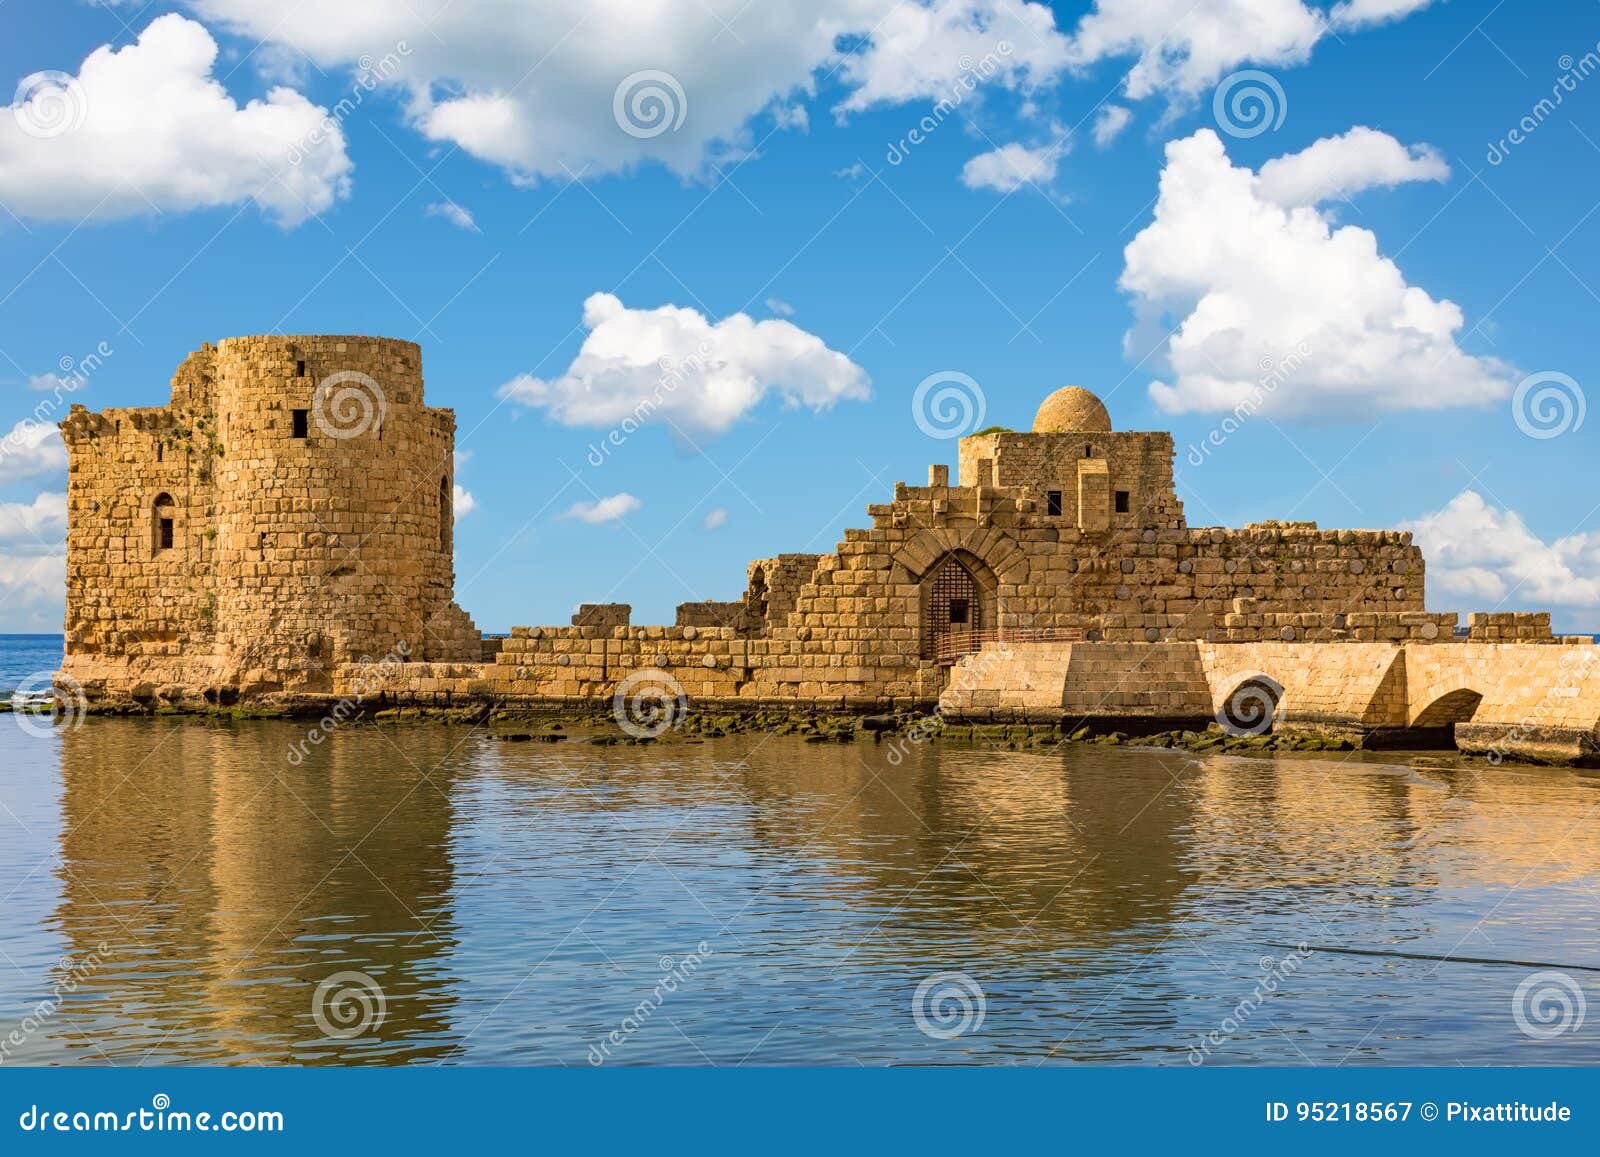 crusaders sea castle sidon saida south lebanon